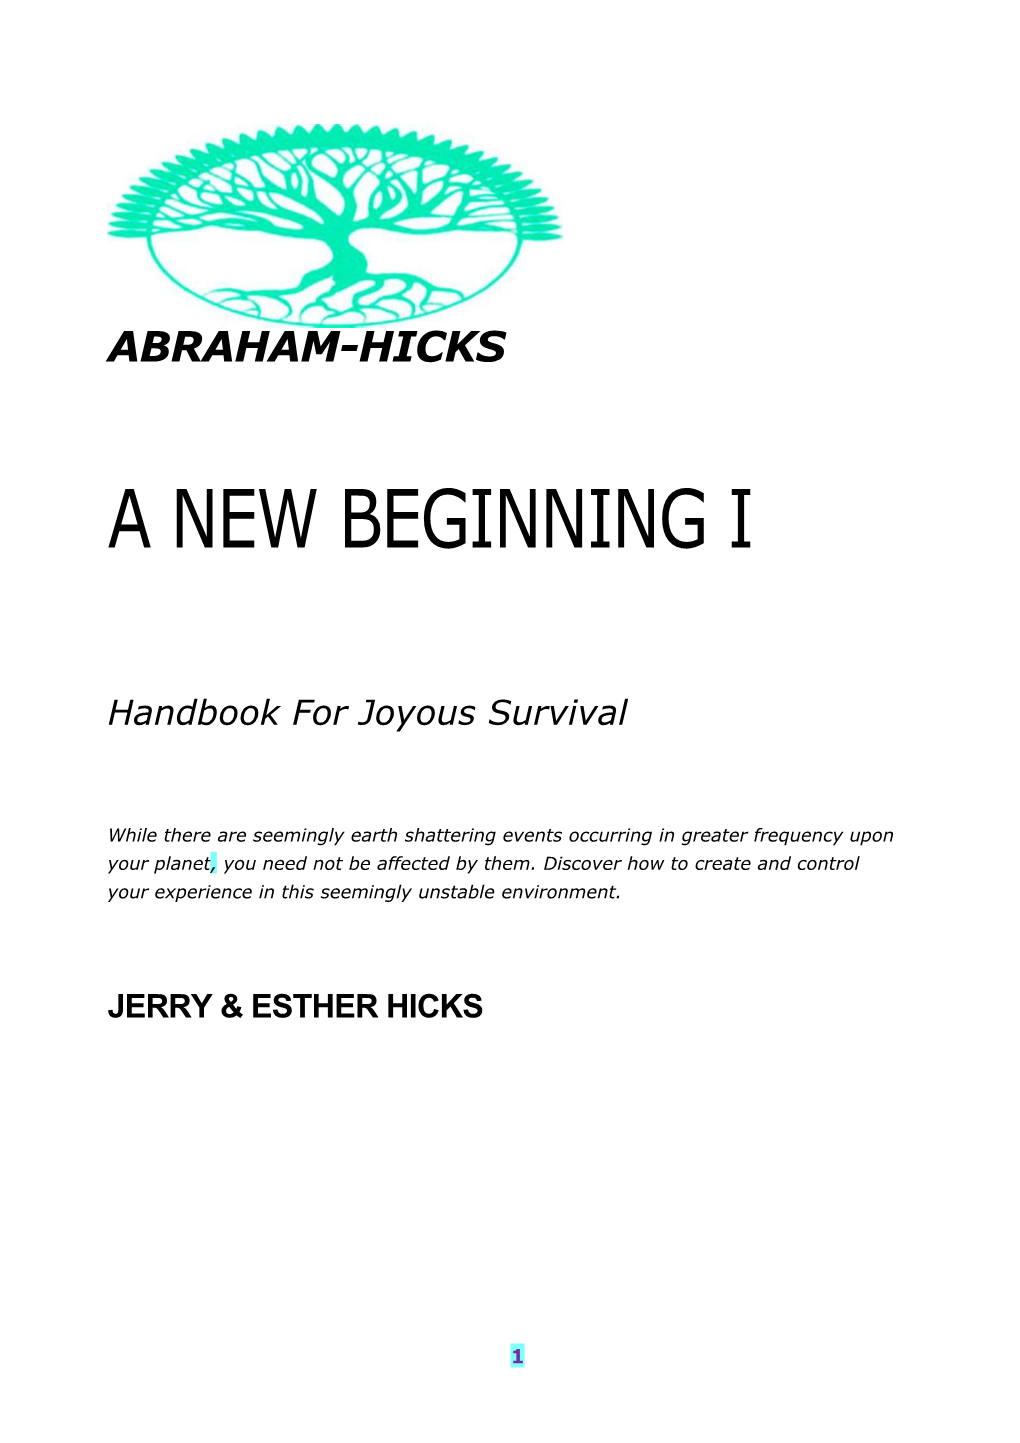 Handbook for Joyous Survival